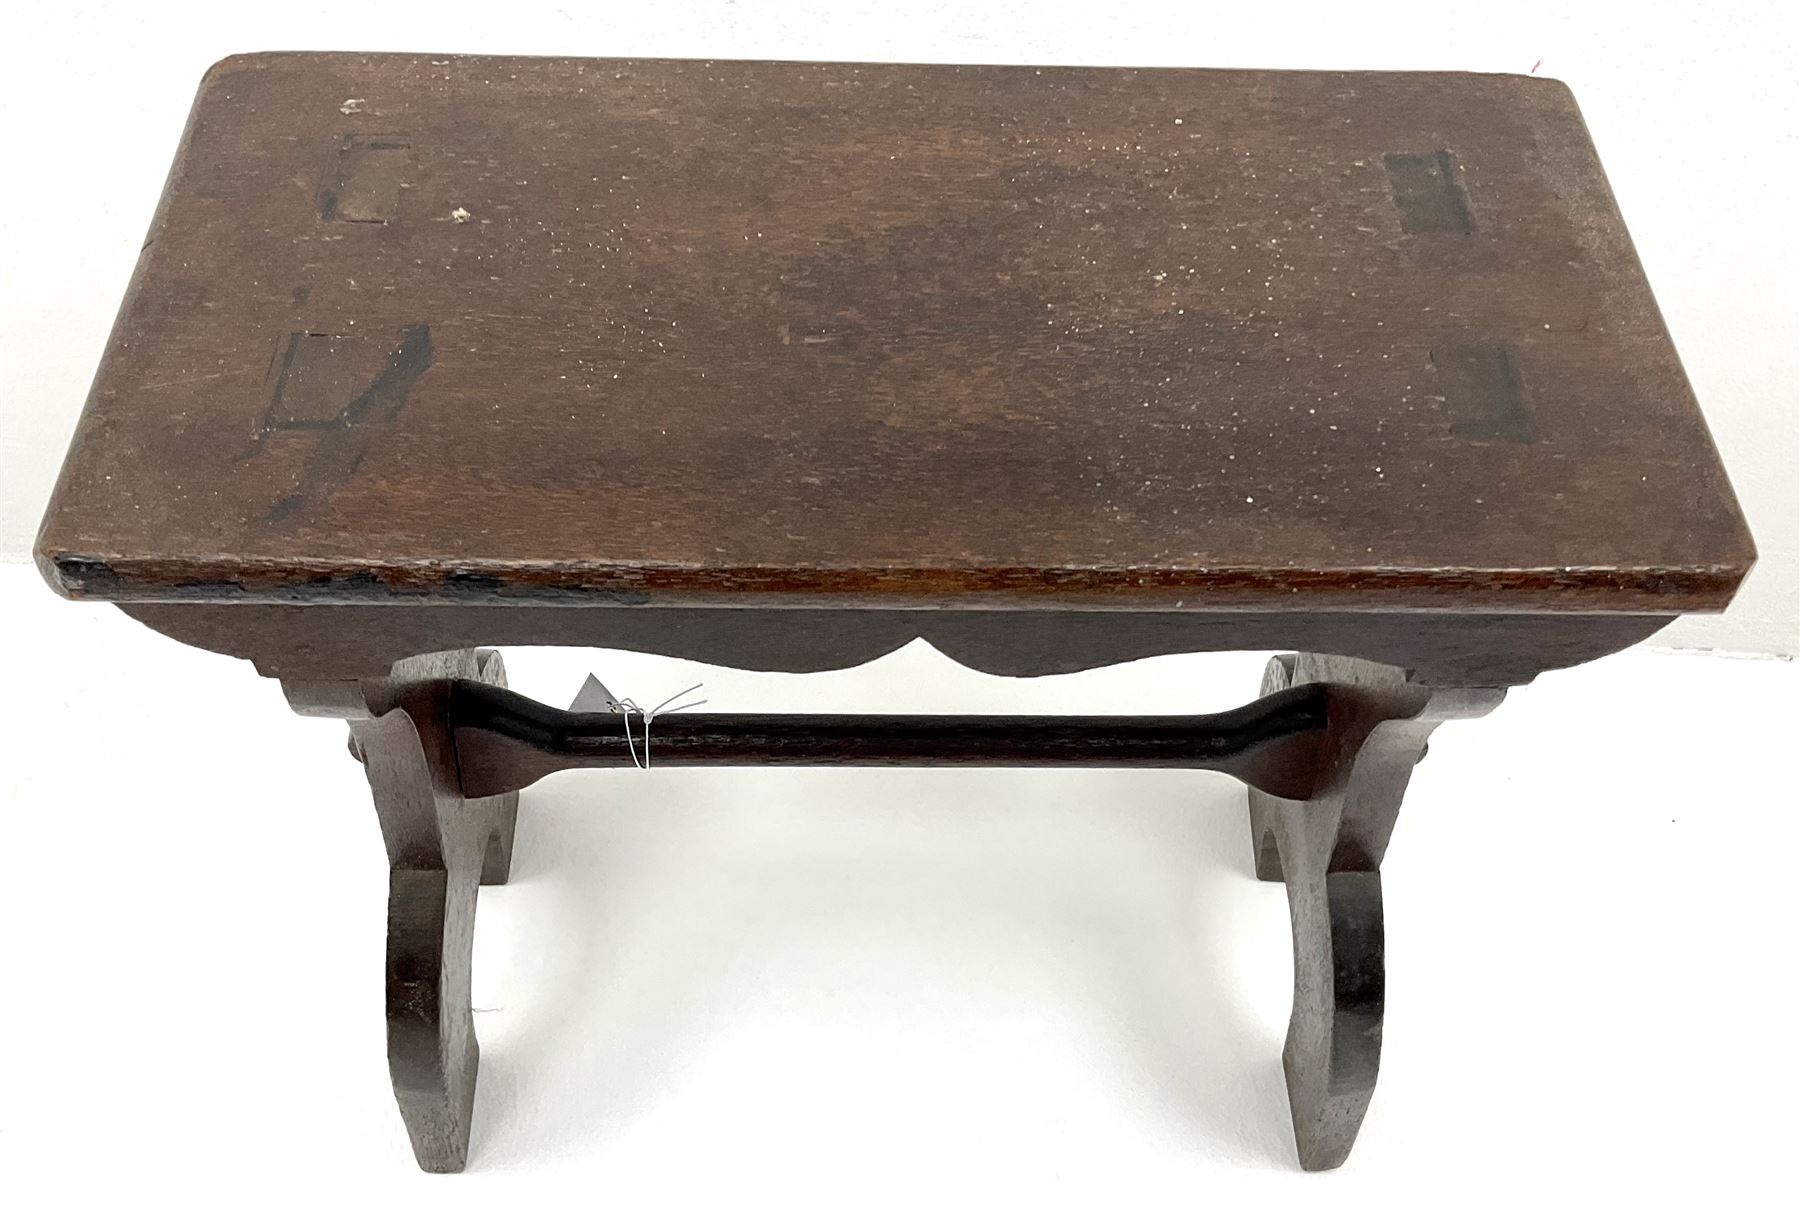 20th century hardwood vernacular joint stool - Image 2 of 3